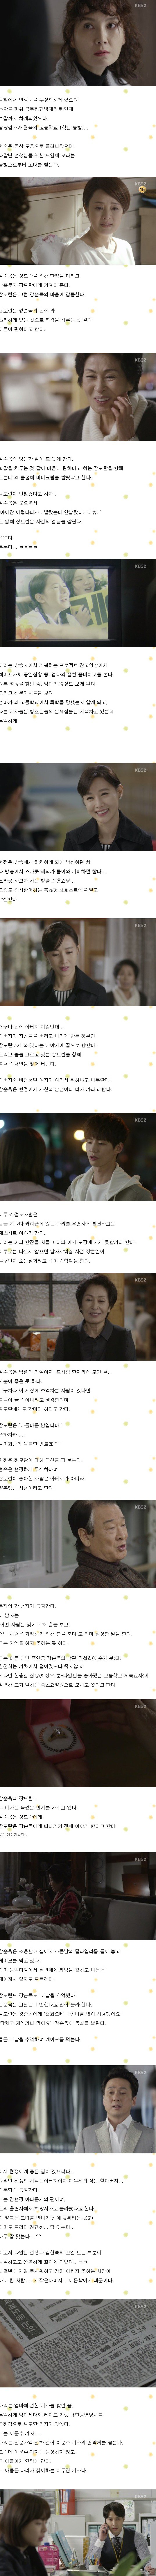 episode 4 captures for the Korean drama 'Unkind Women'